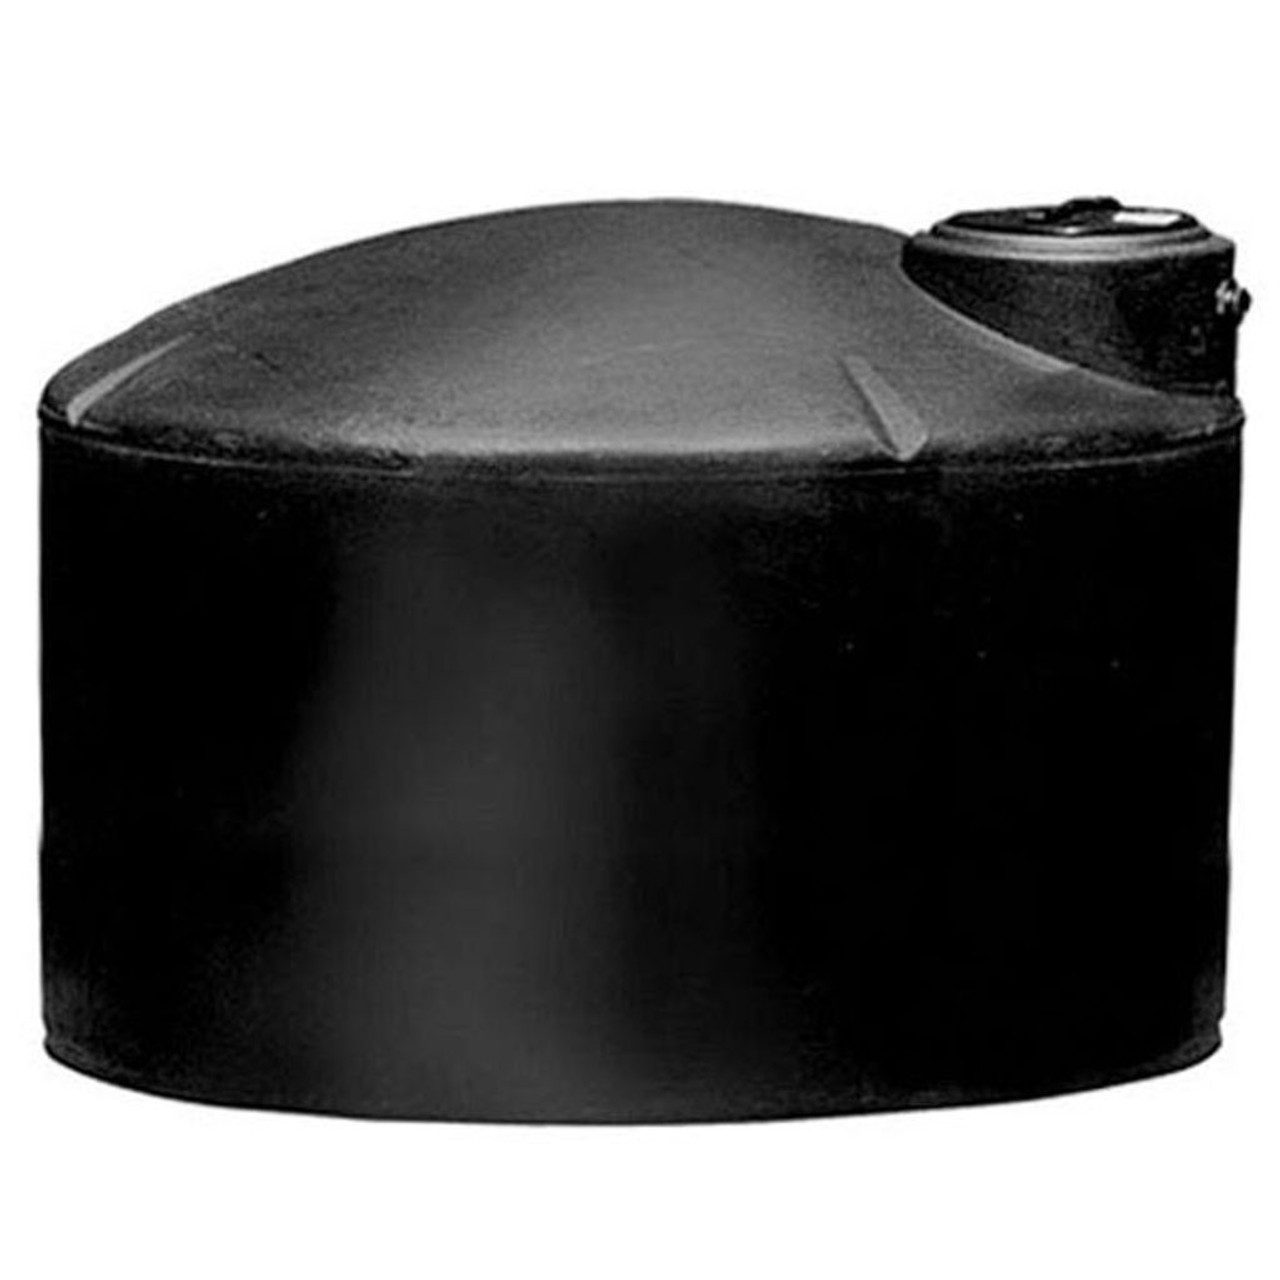 2500 Gallon Water Storage Tank - Black